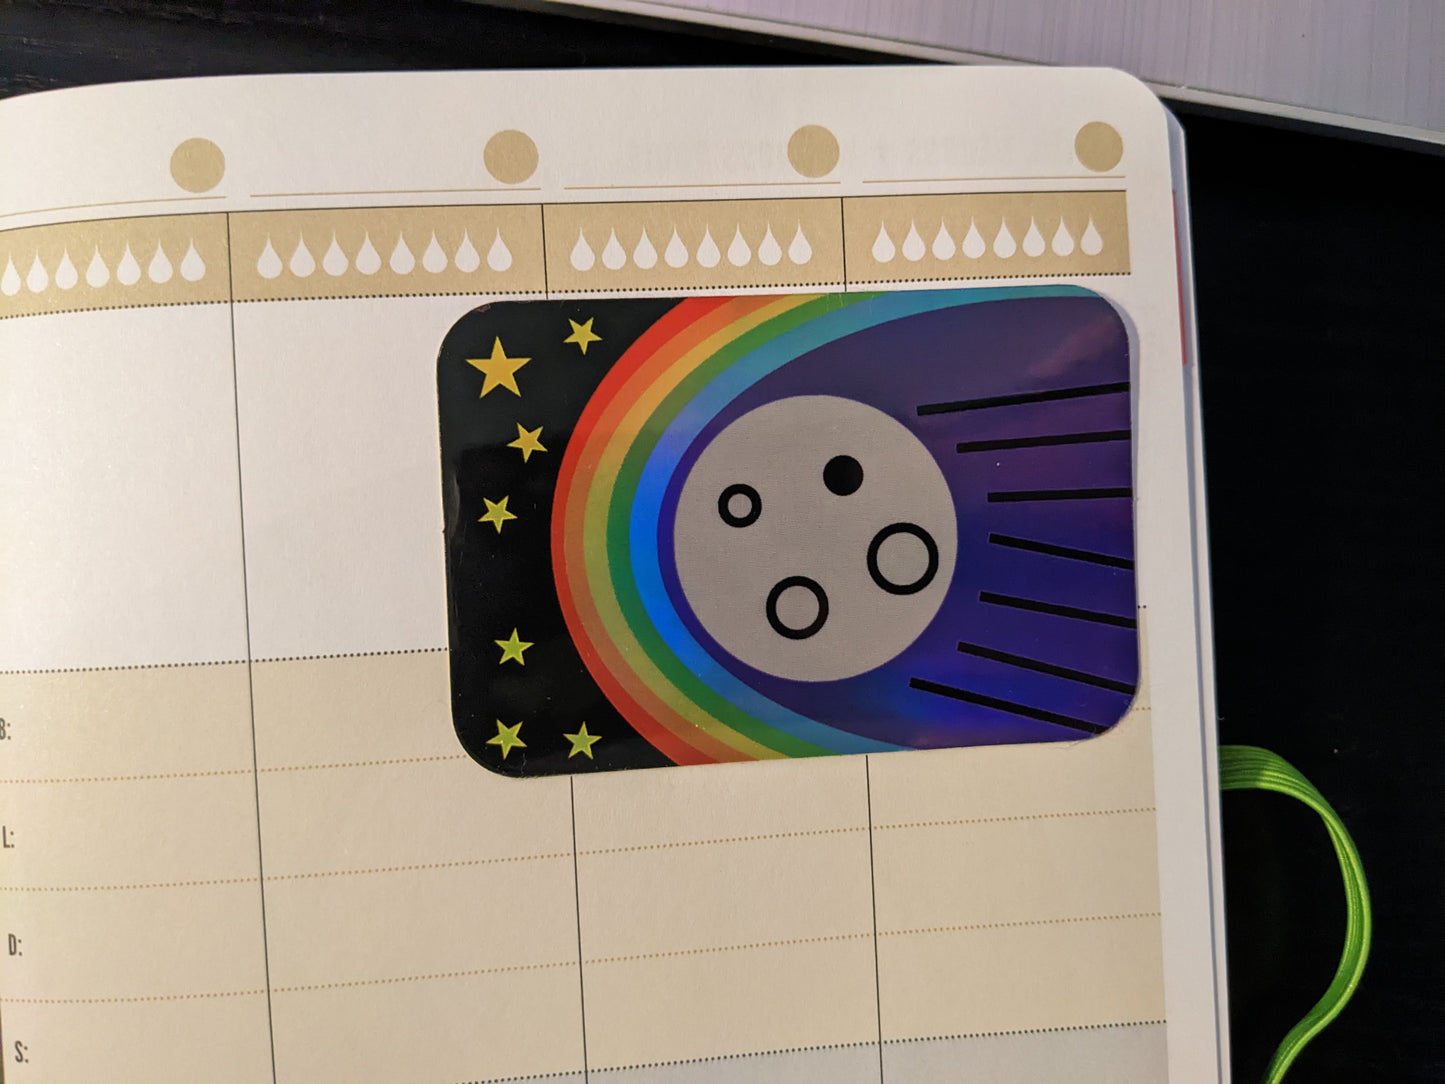 Midnight Rainbow Comet Holographic Sticker